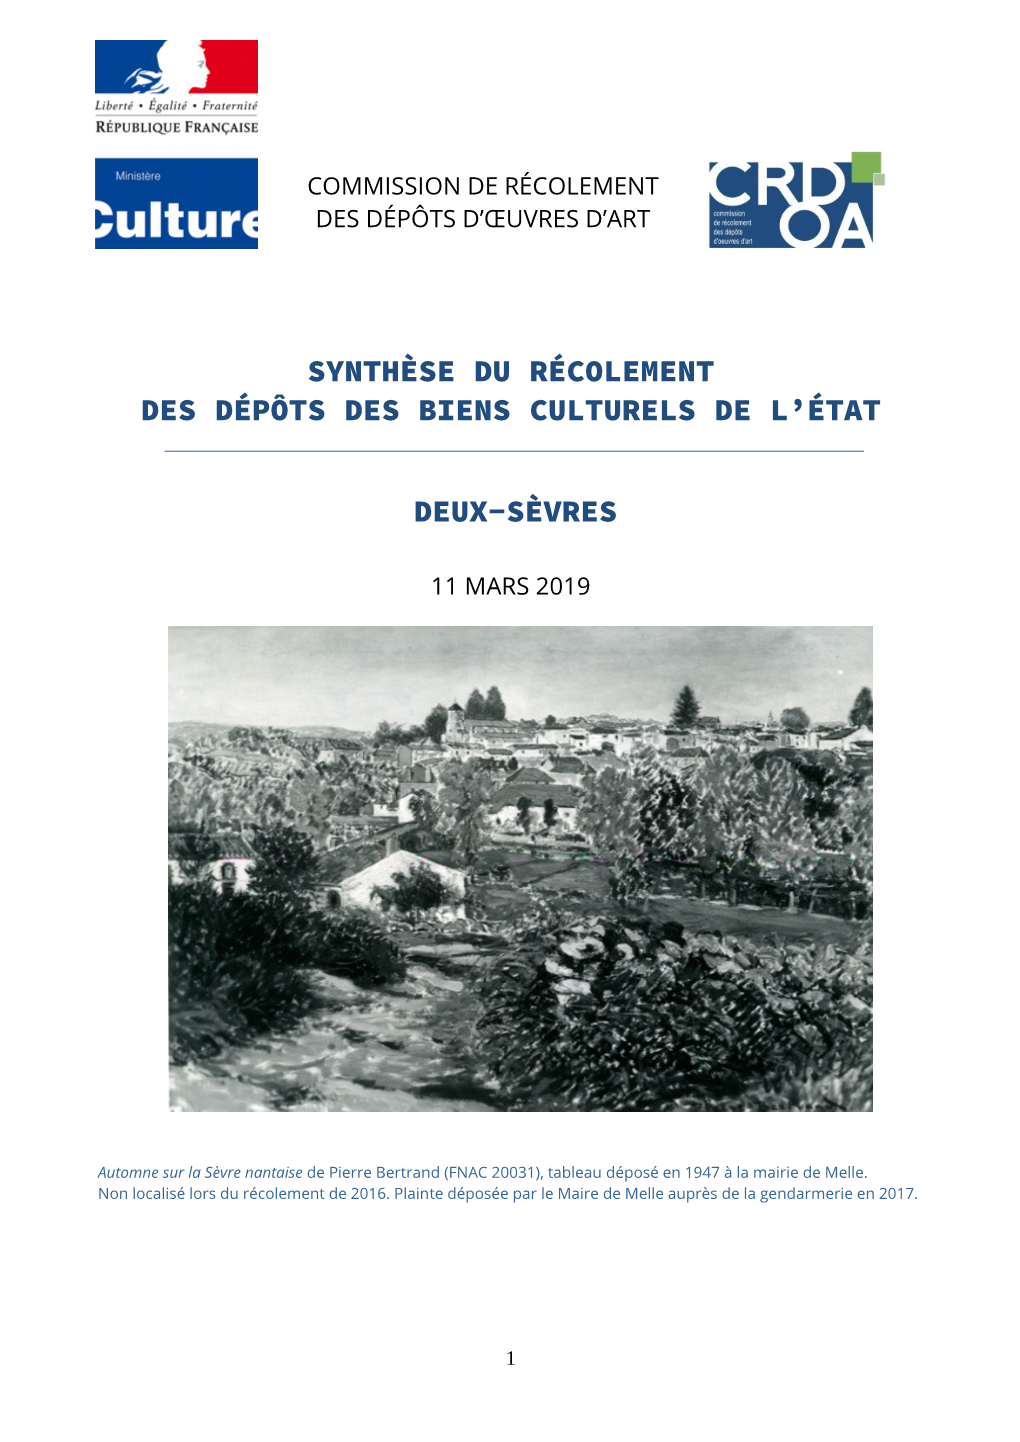 Synthèse Deux-Sèvres PDF 385 KO